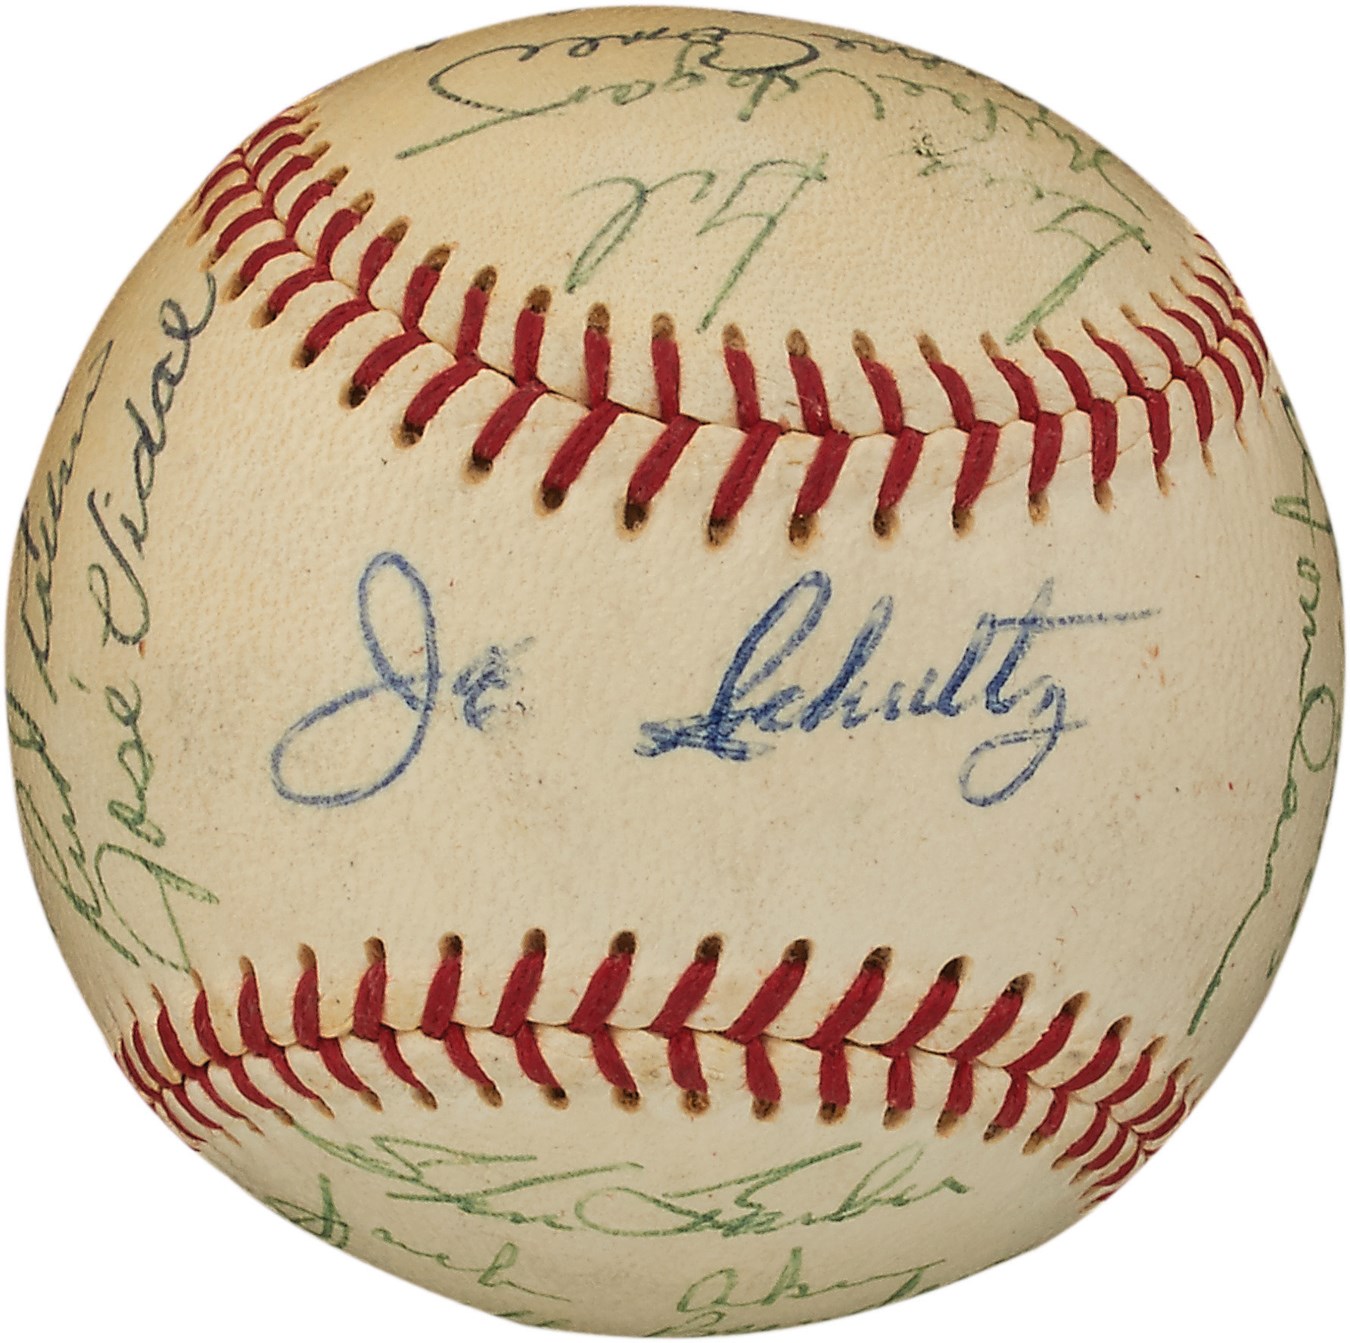 - 1969 Seattle Pilots Team-Signed Baseball